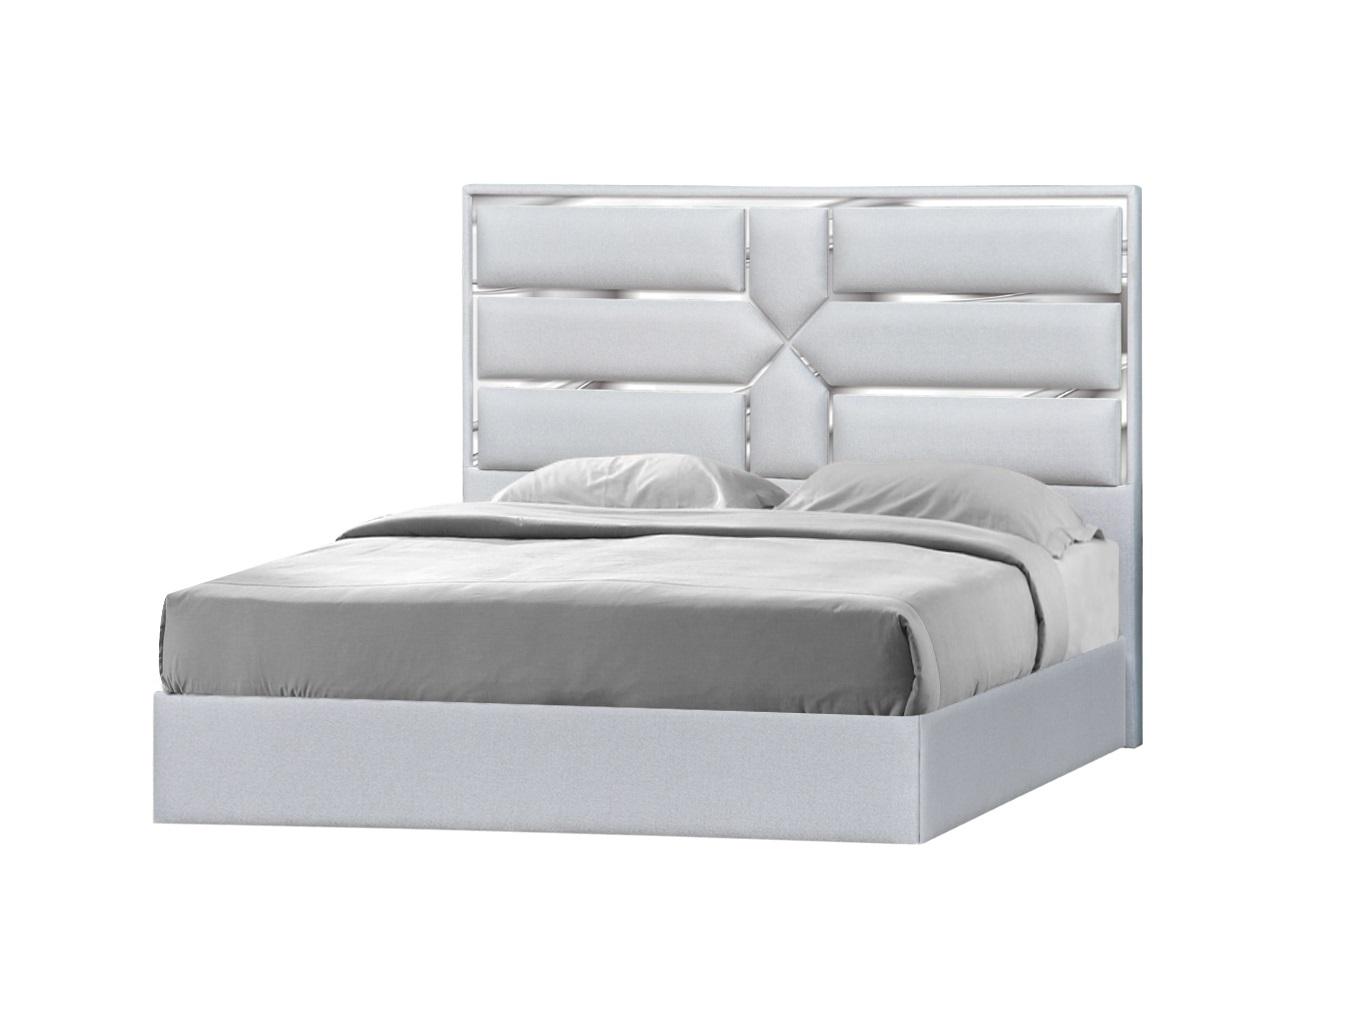 Contemporary Platform Bed Da Vinci SKU 18731-Q-Bed in Light Grey Fabric